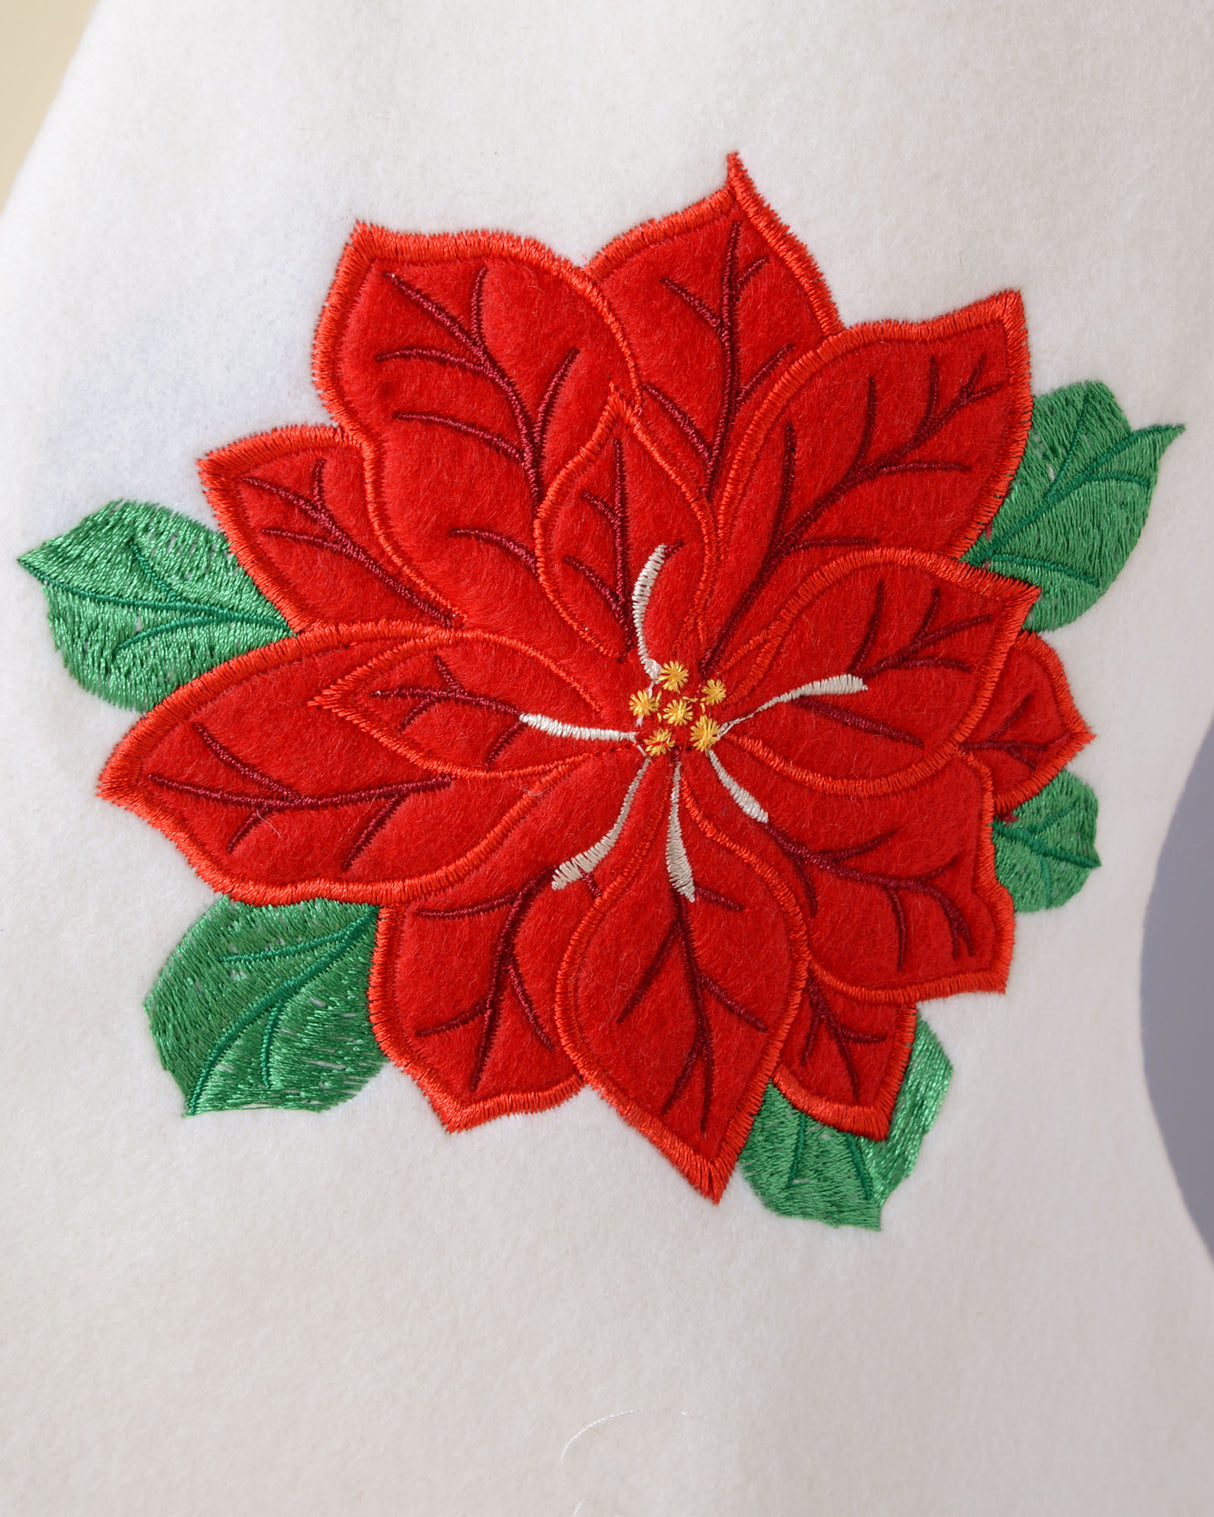 Poinsettia Embroidered Stocking, Red/White, 48 cm